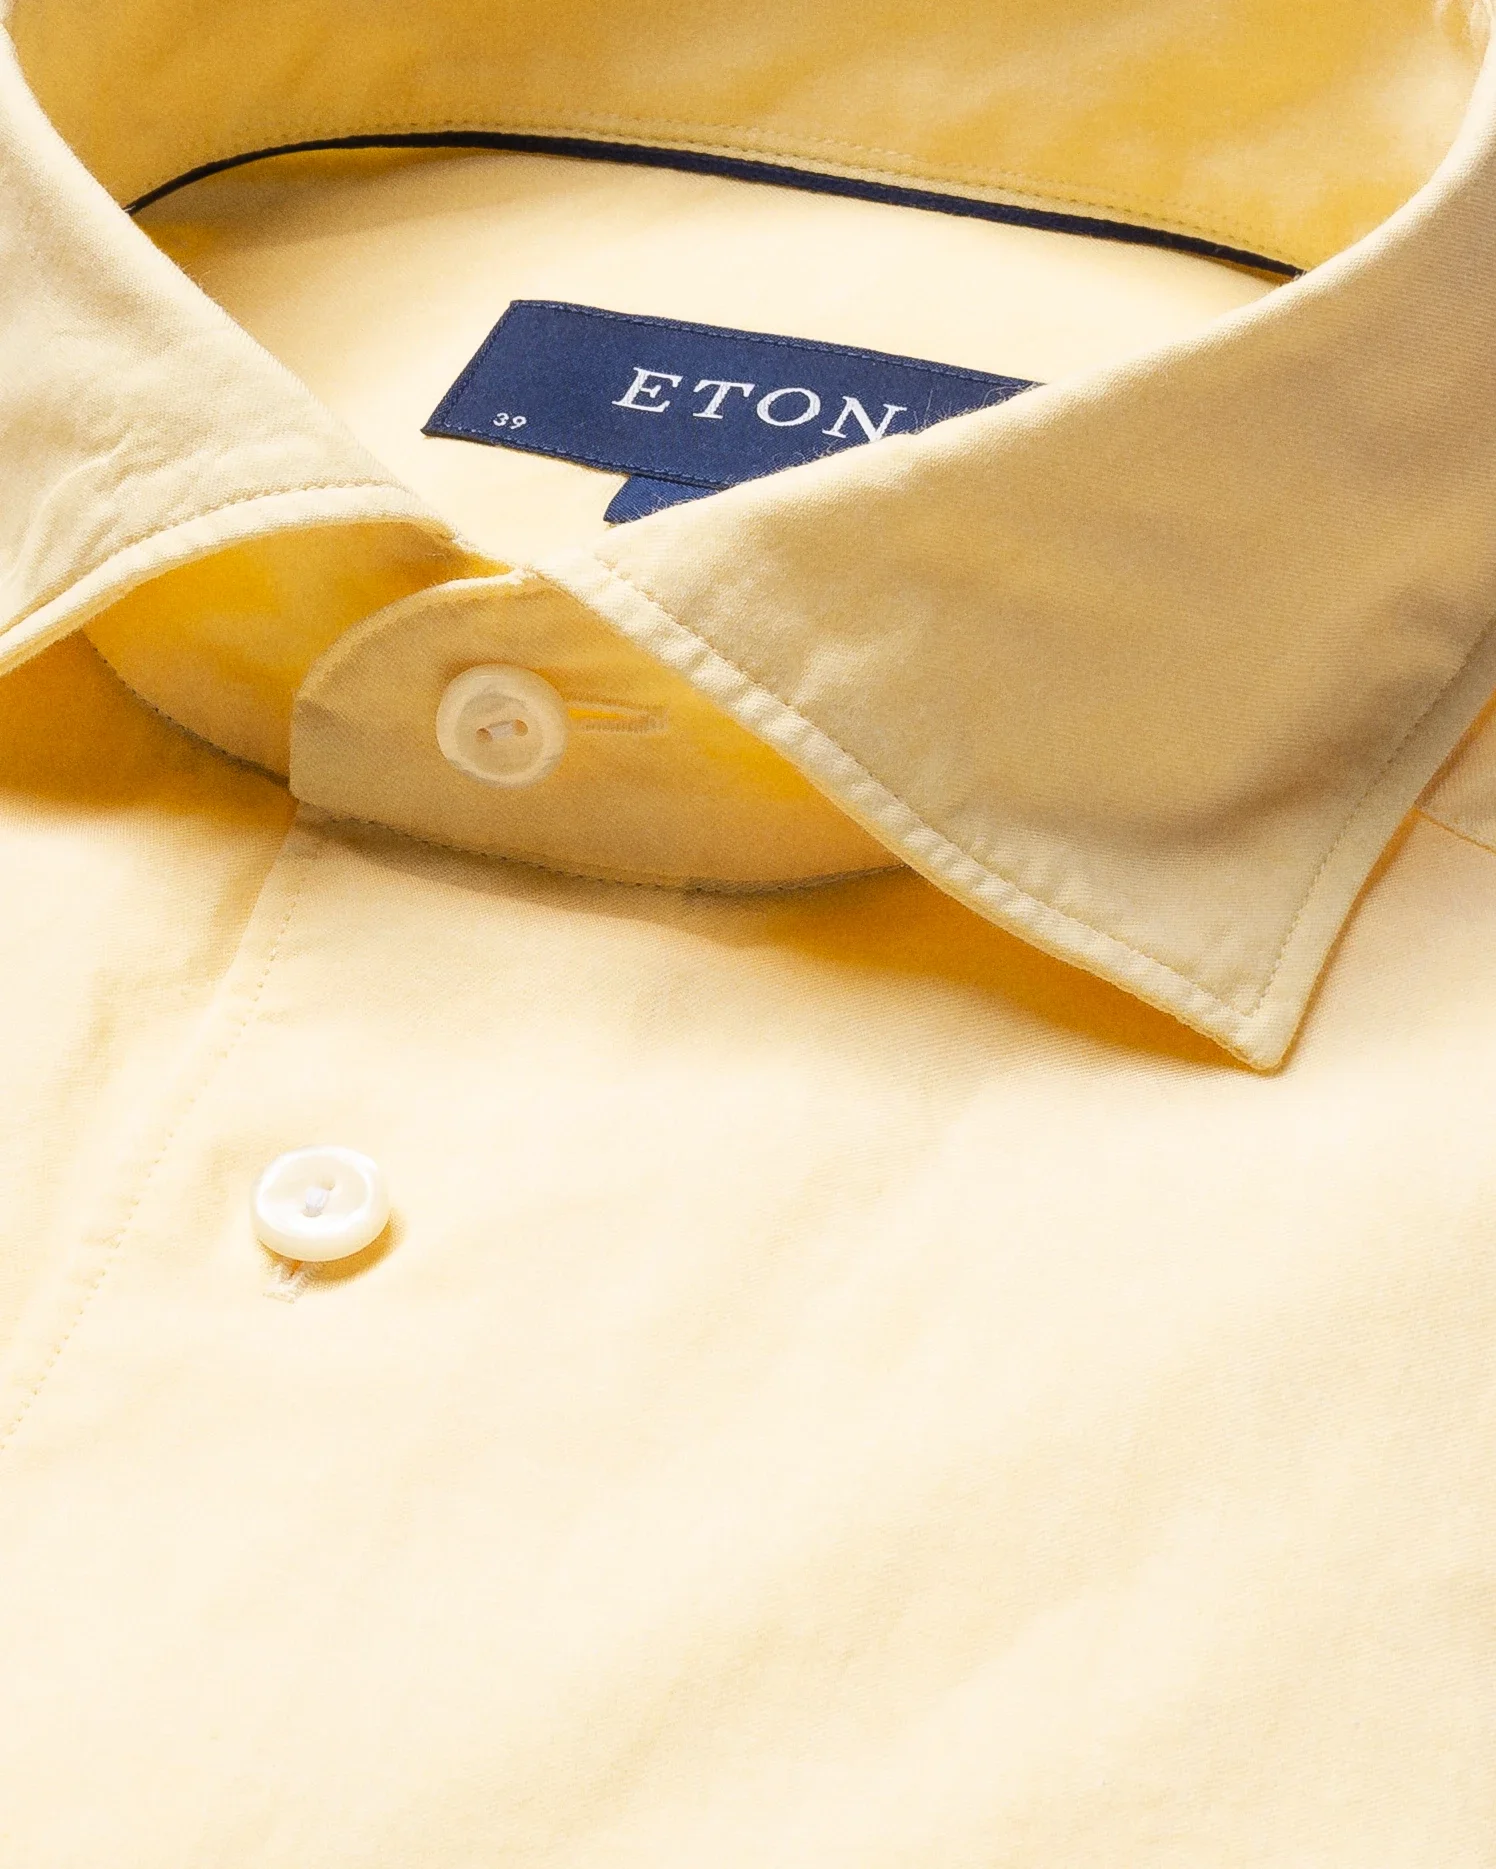 Eton - yellow cotton silk shirt soft